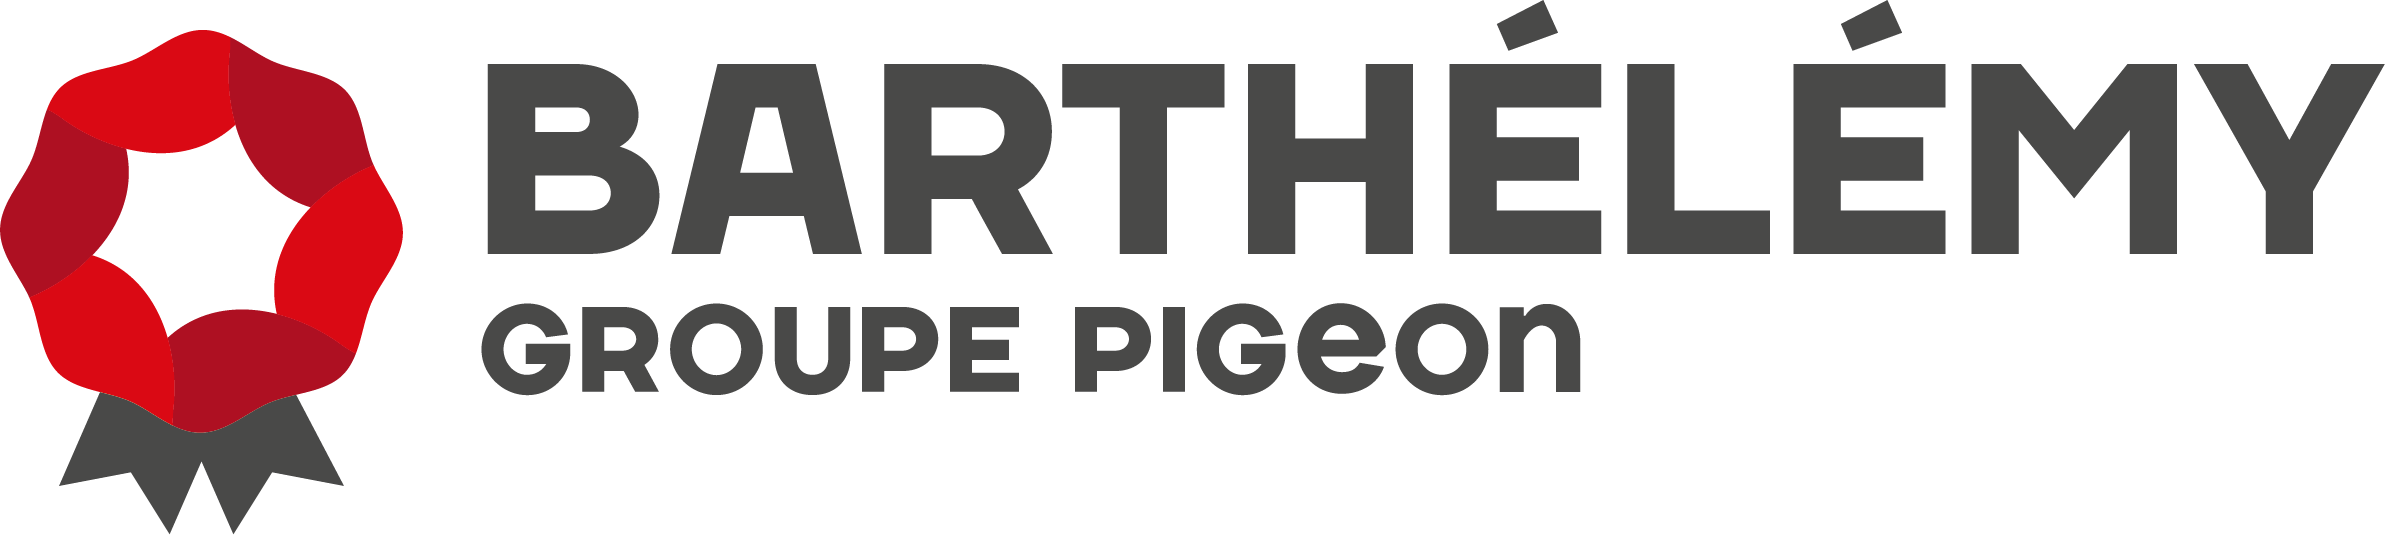 ENTREPRISE BARTHELEMY / Groupe PIGEON